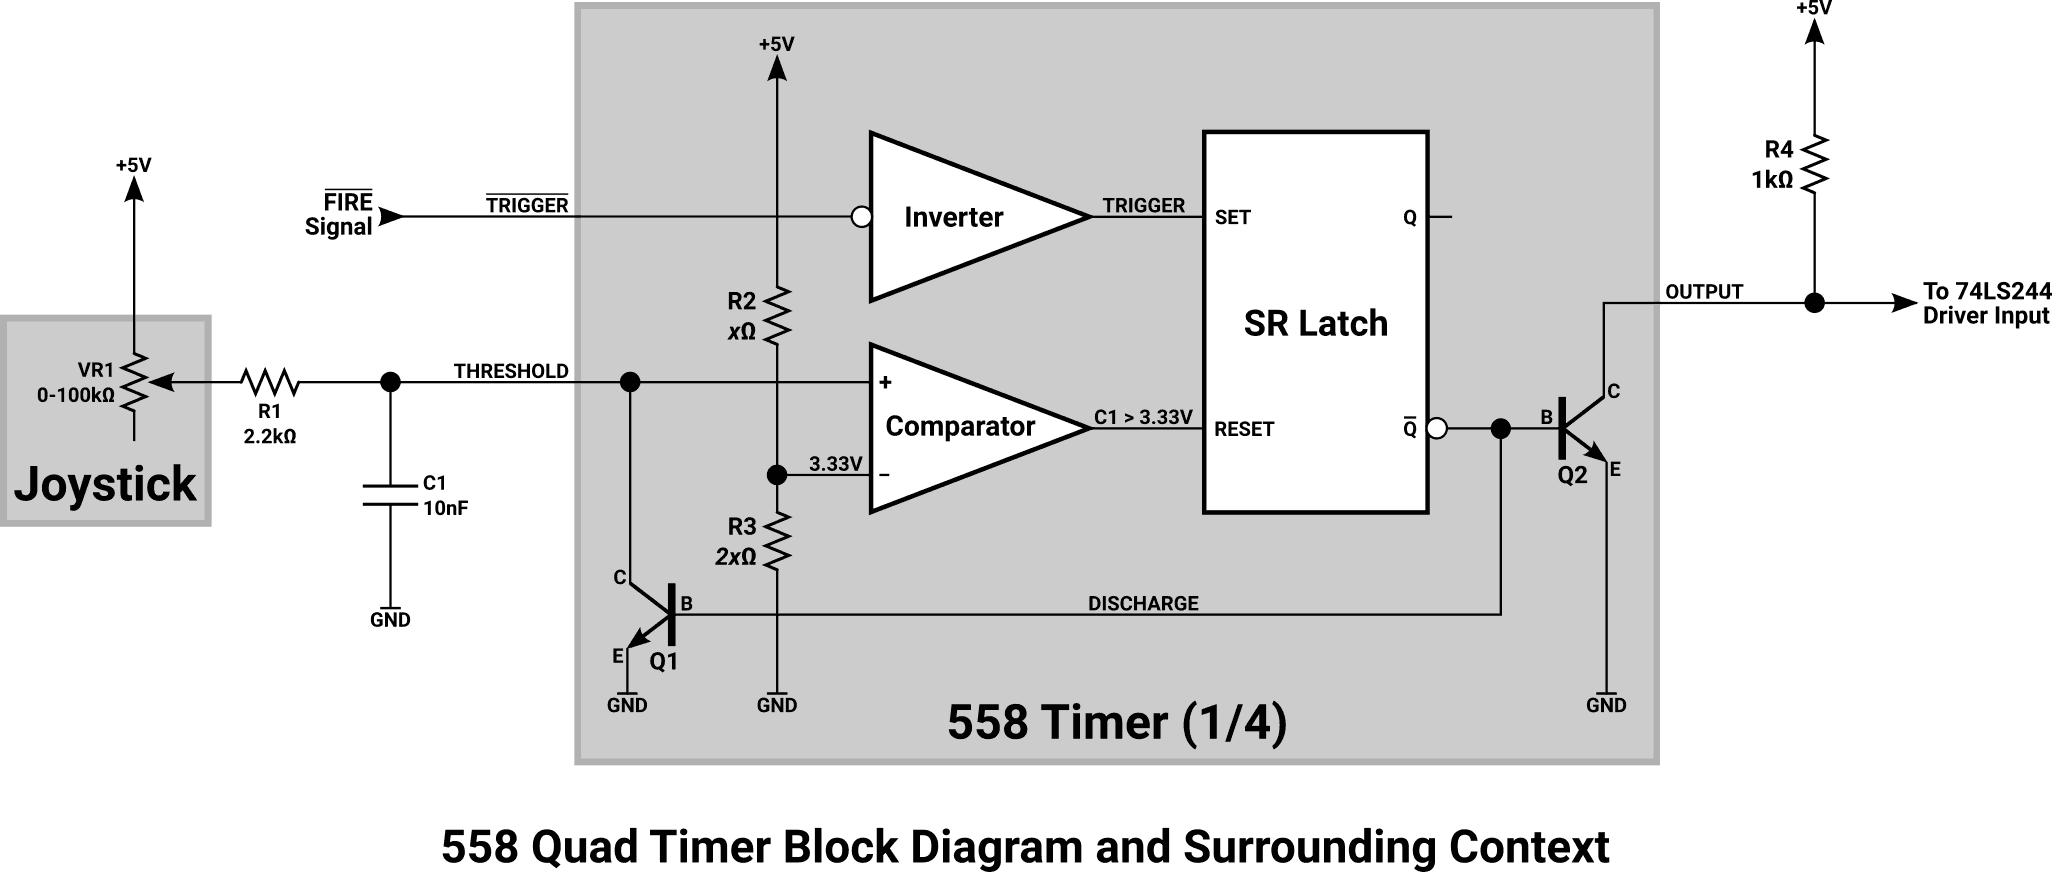 558 Quad Timer block diagram and surrounding context.